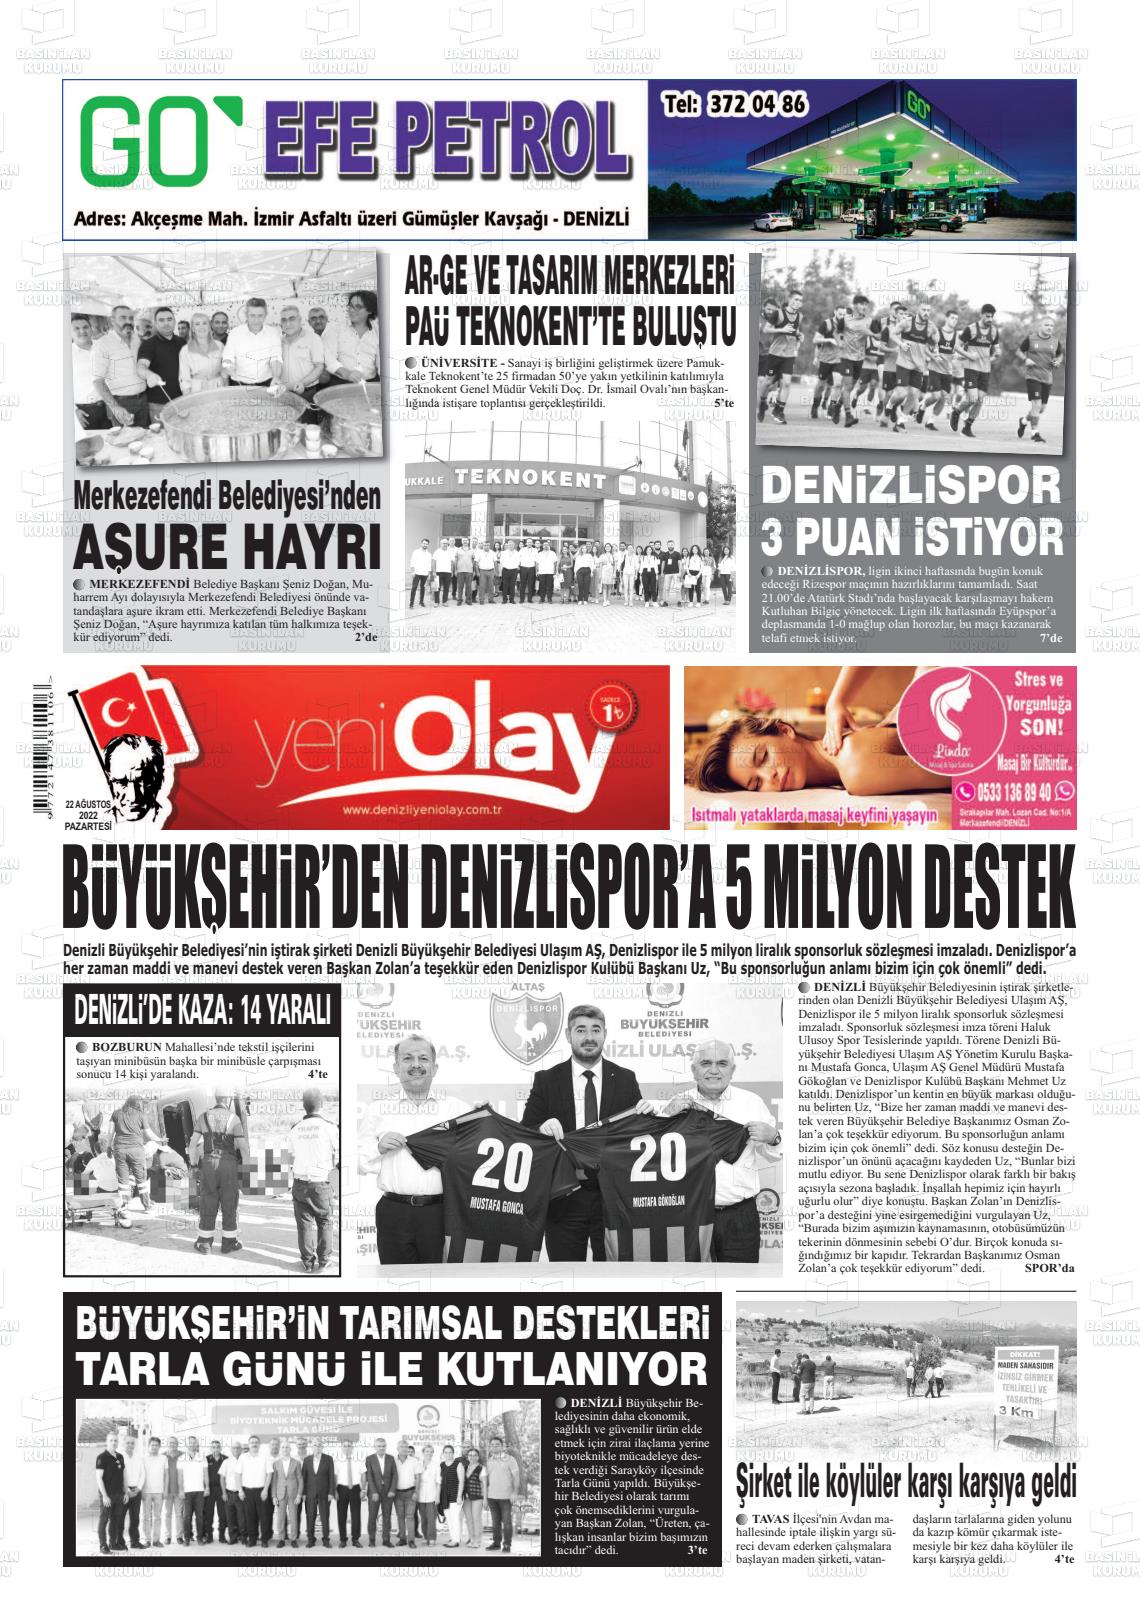 22 Ağustos 2022 Denizli Yeni Olay Gazete Manşeti